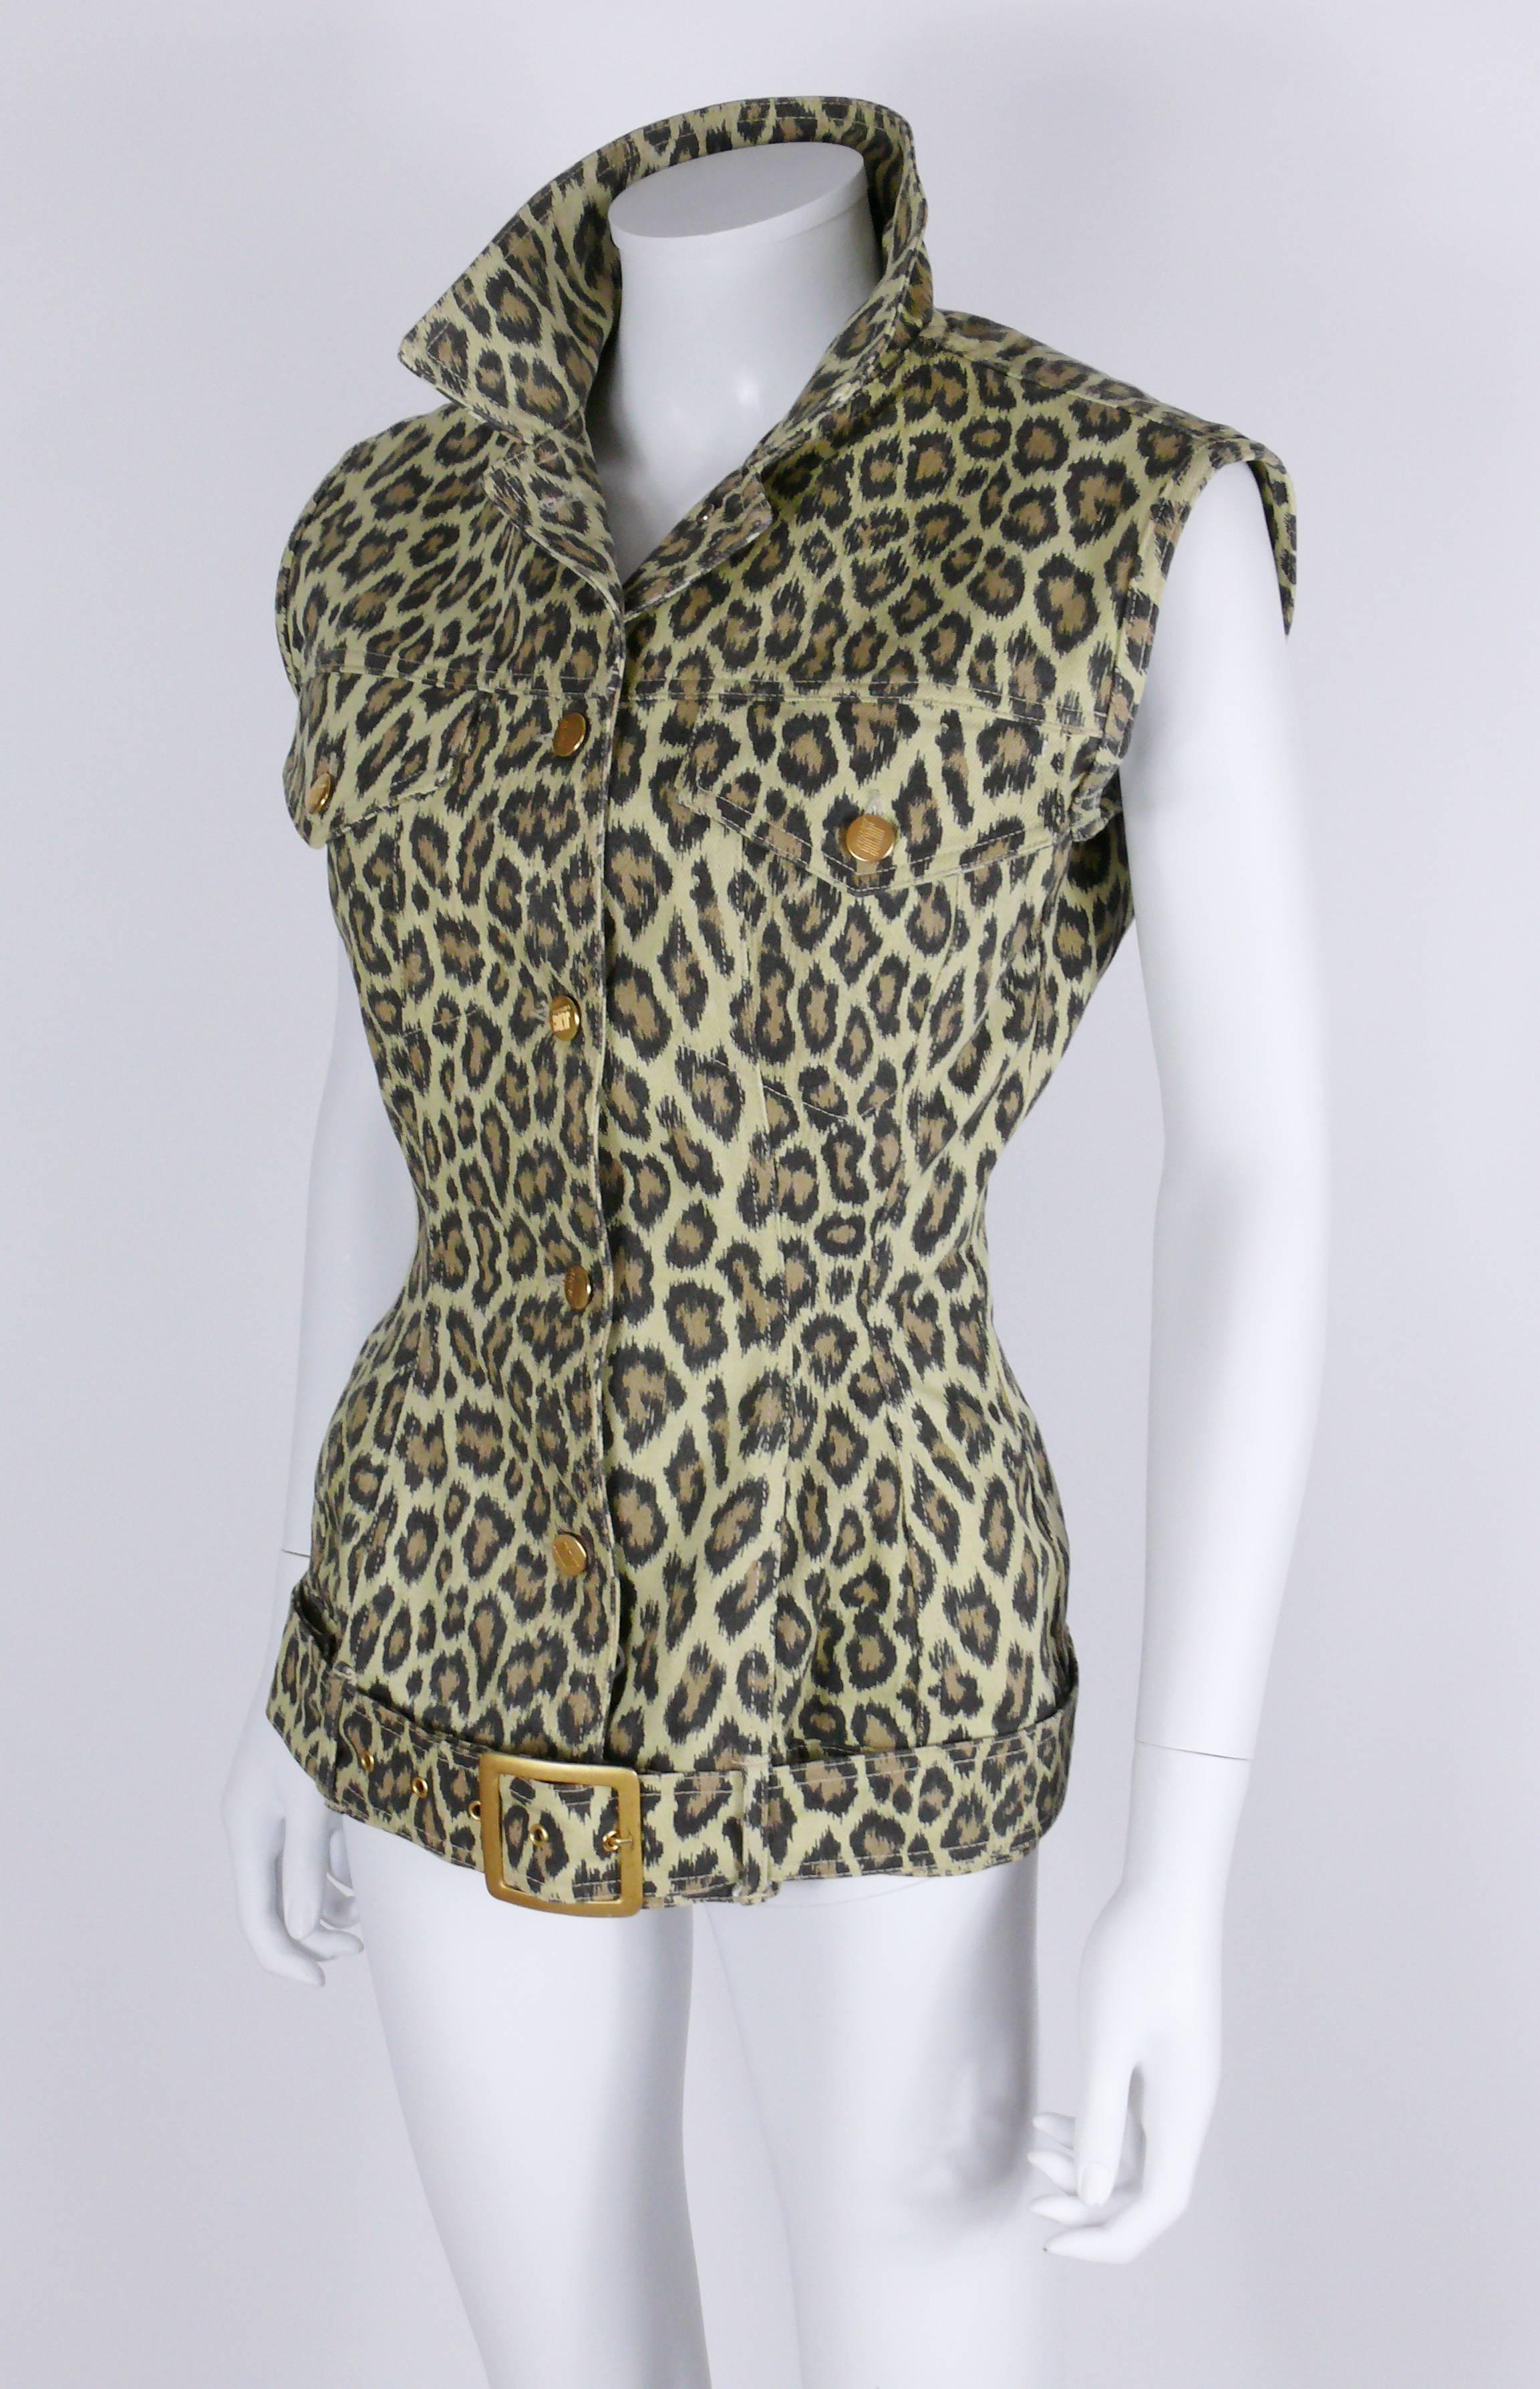 Gray Jean Paul Gaultier Vintage Denim Cheetah Print Corset Jacket